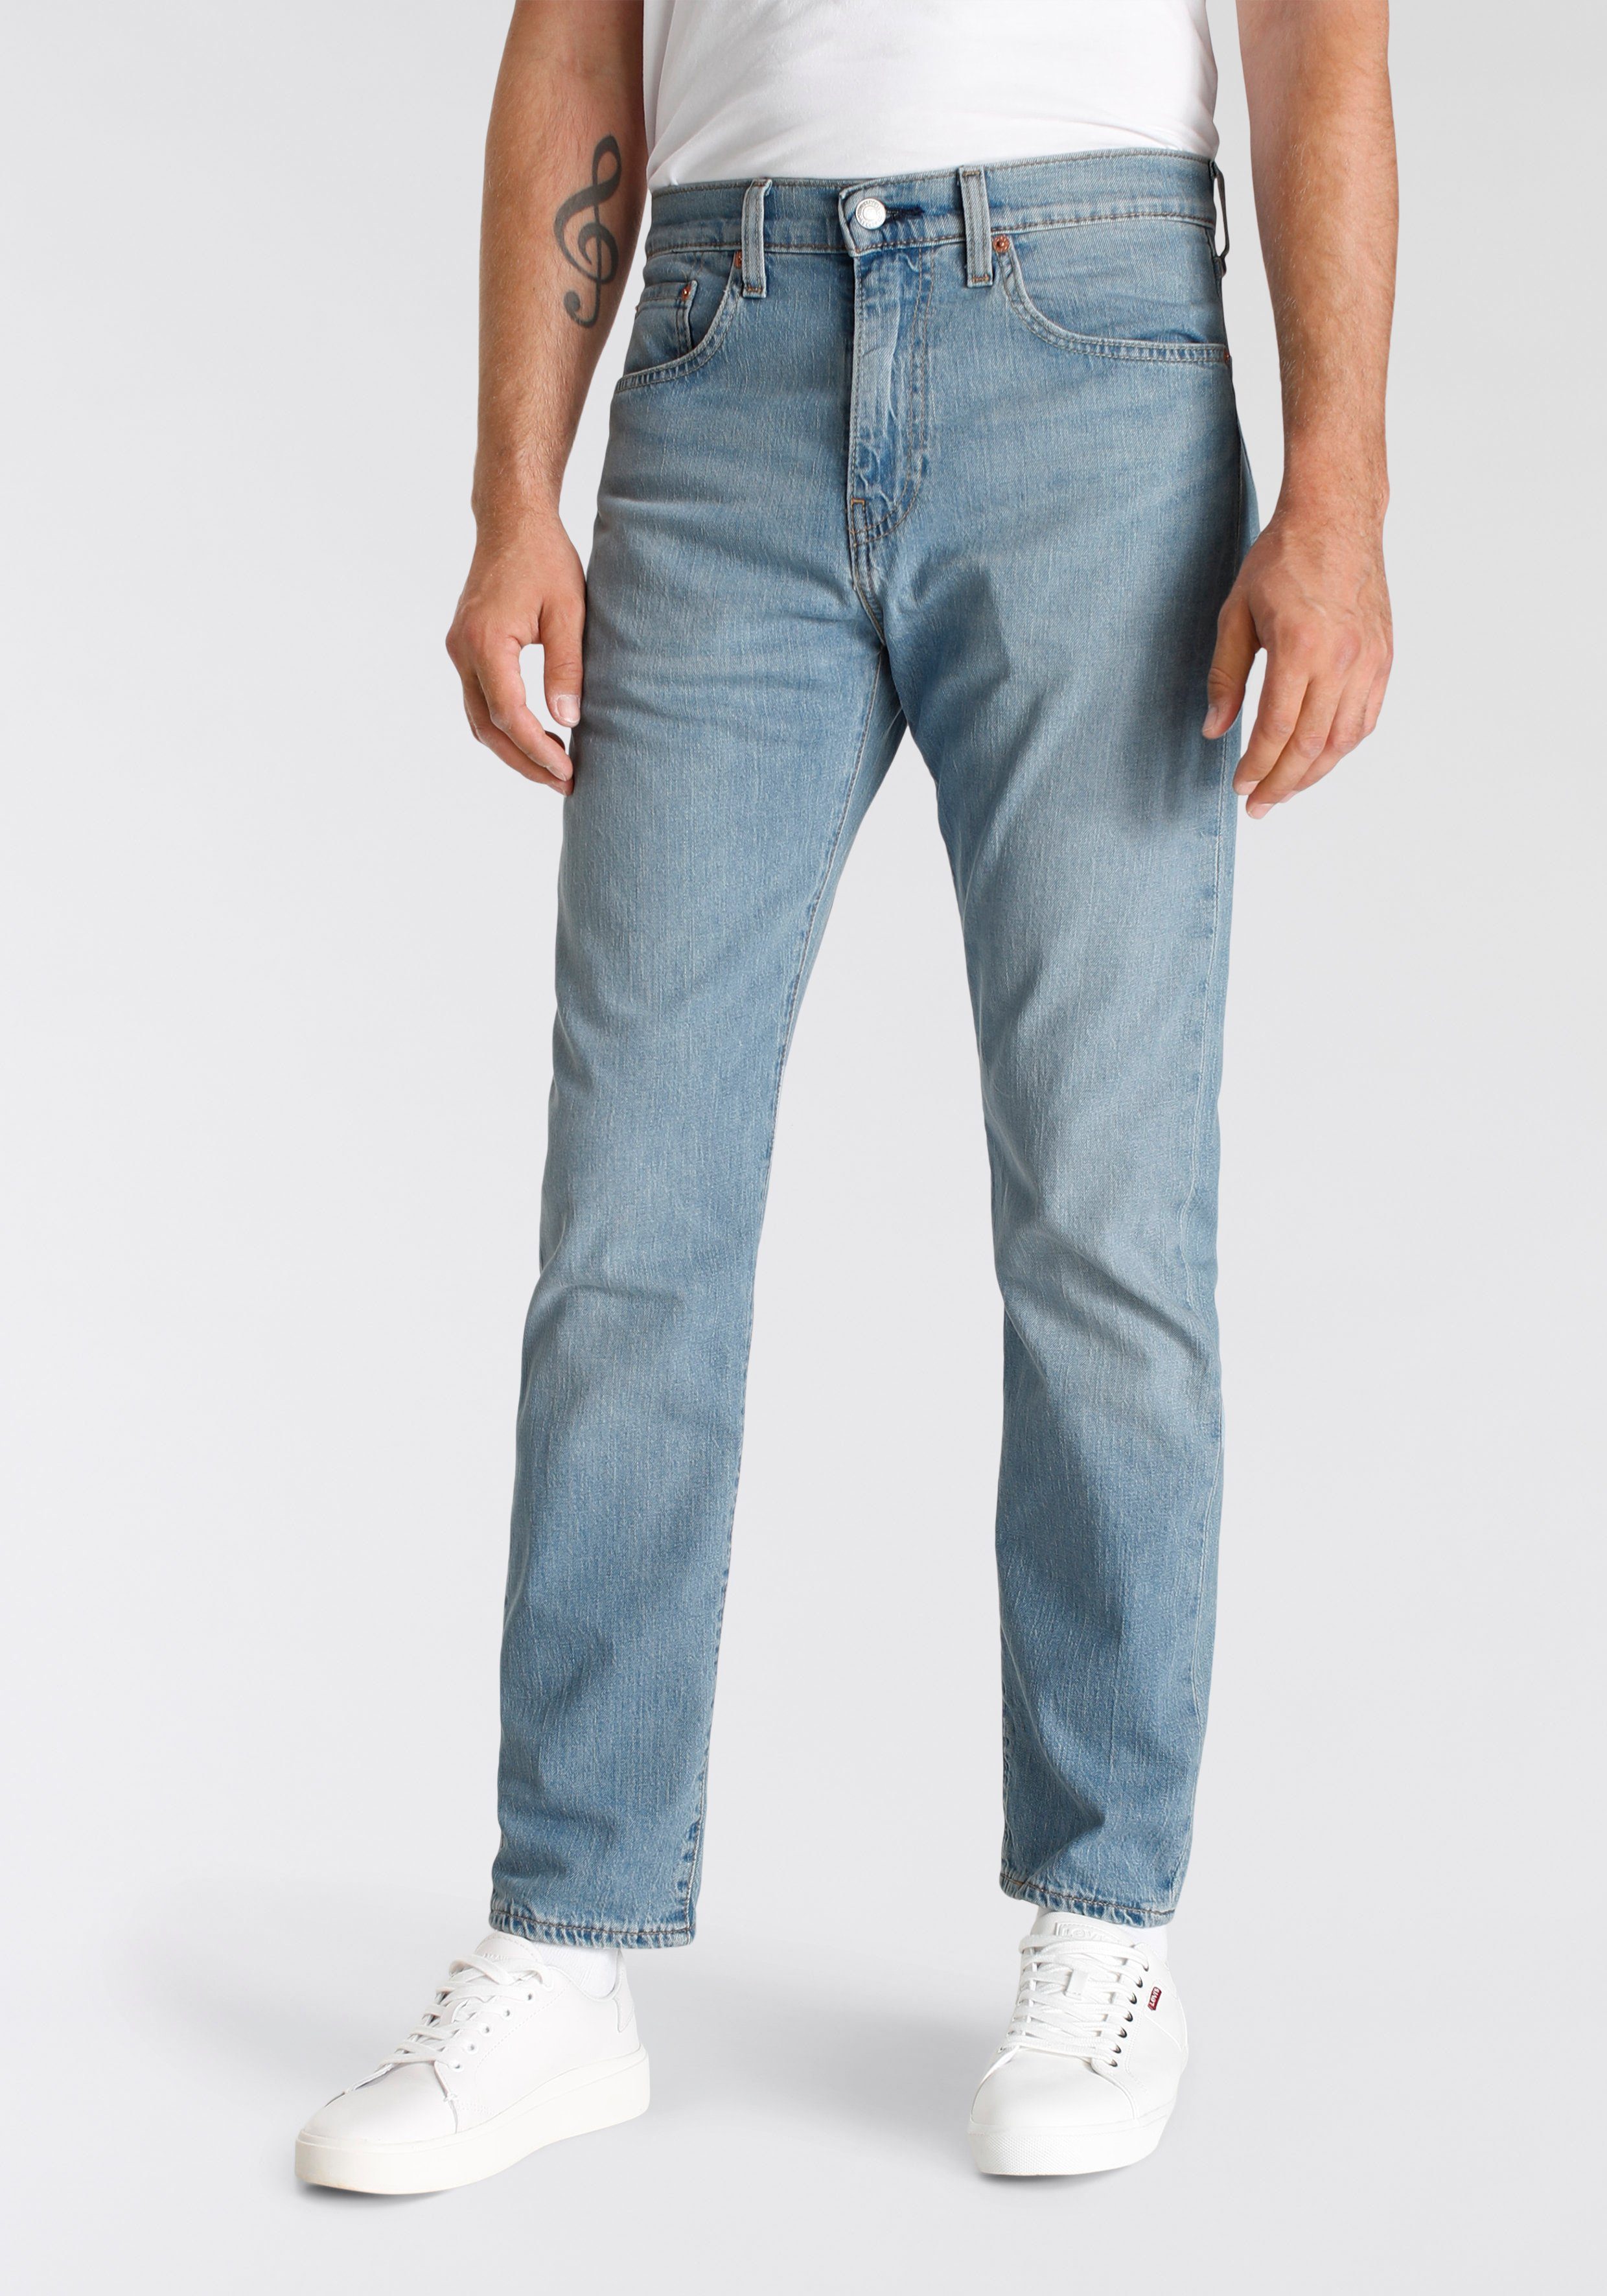 Levi's Tapered jeans 502 TAPER in een elegante, moderne stijl